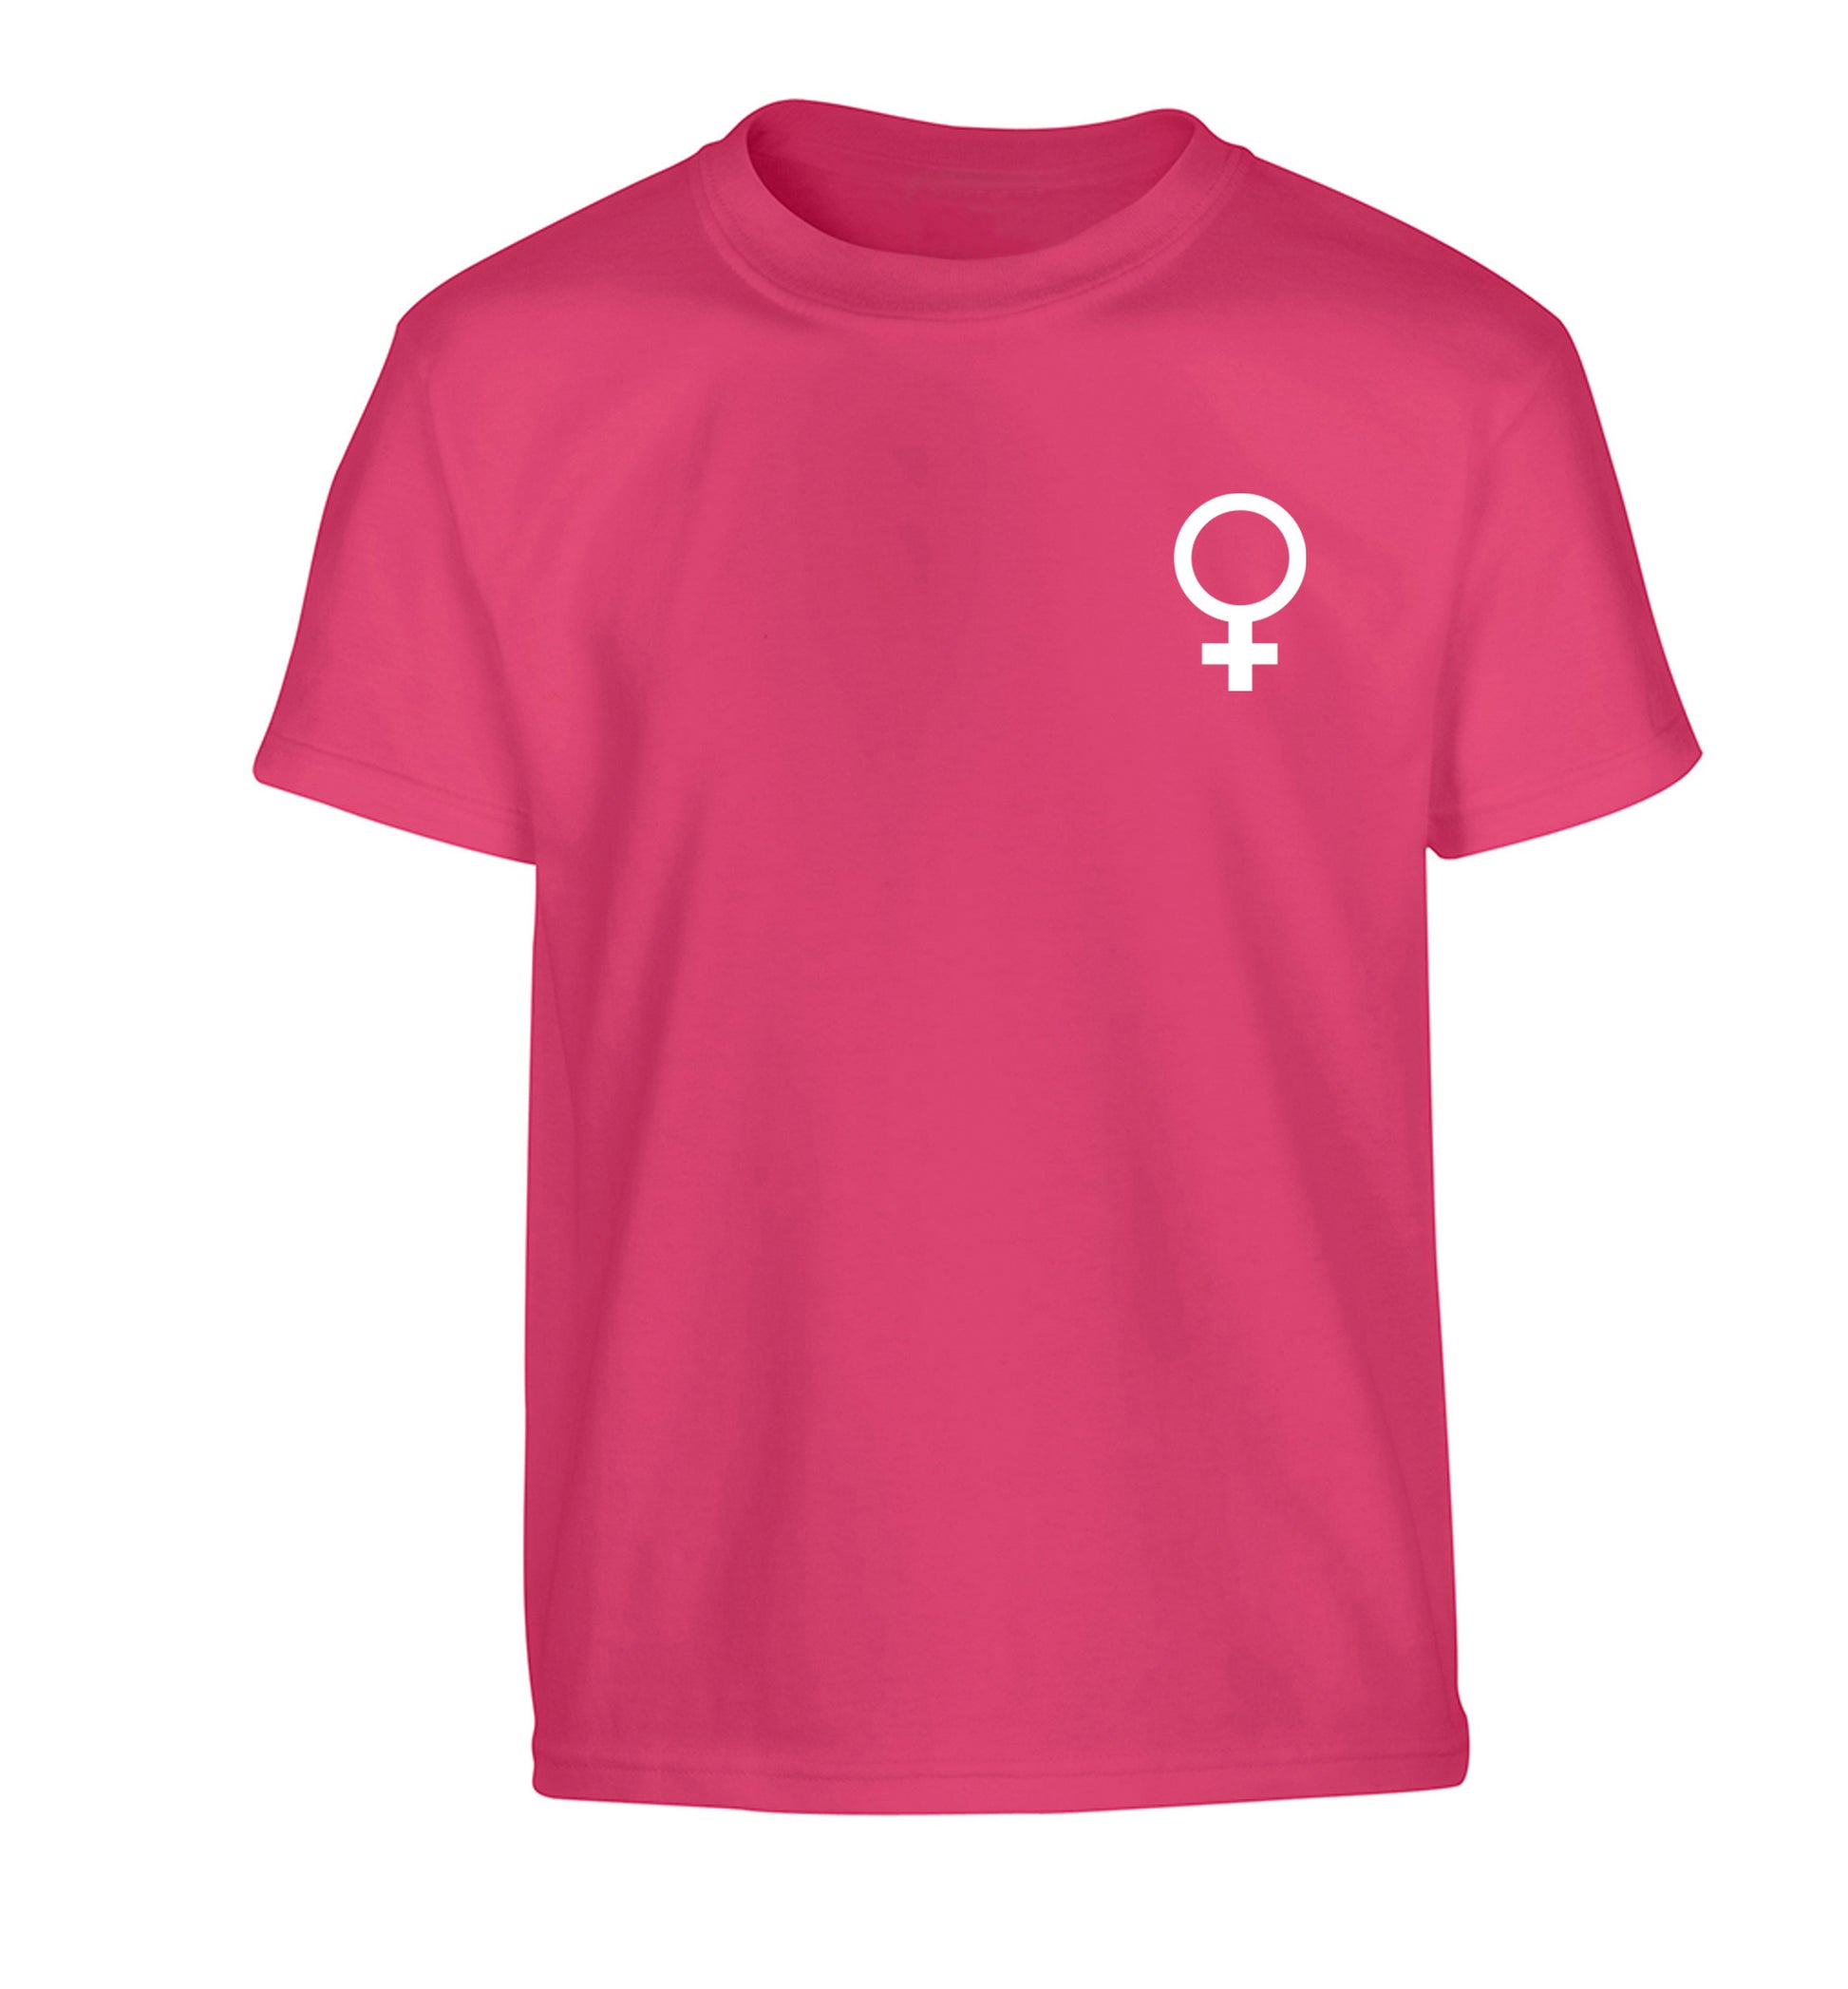 Female pocket symbol Children's pink Tshirt 12-14 Years